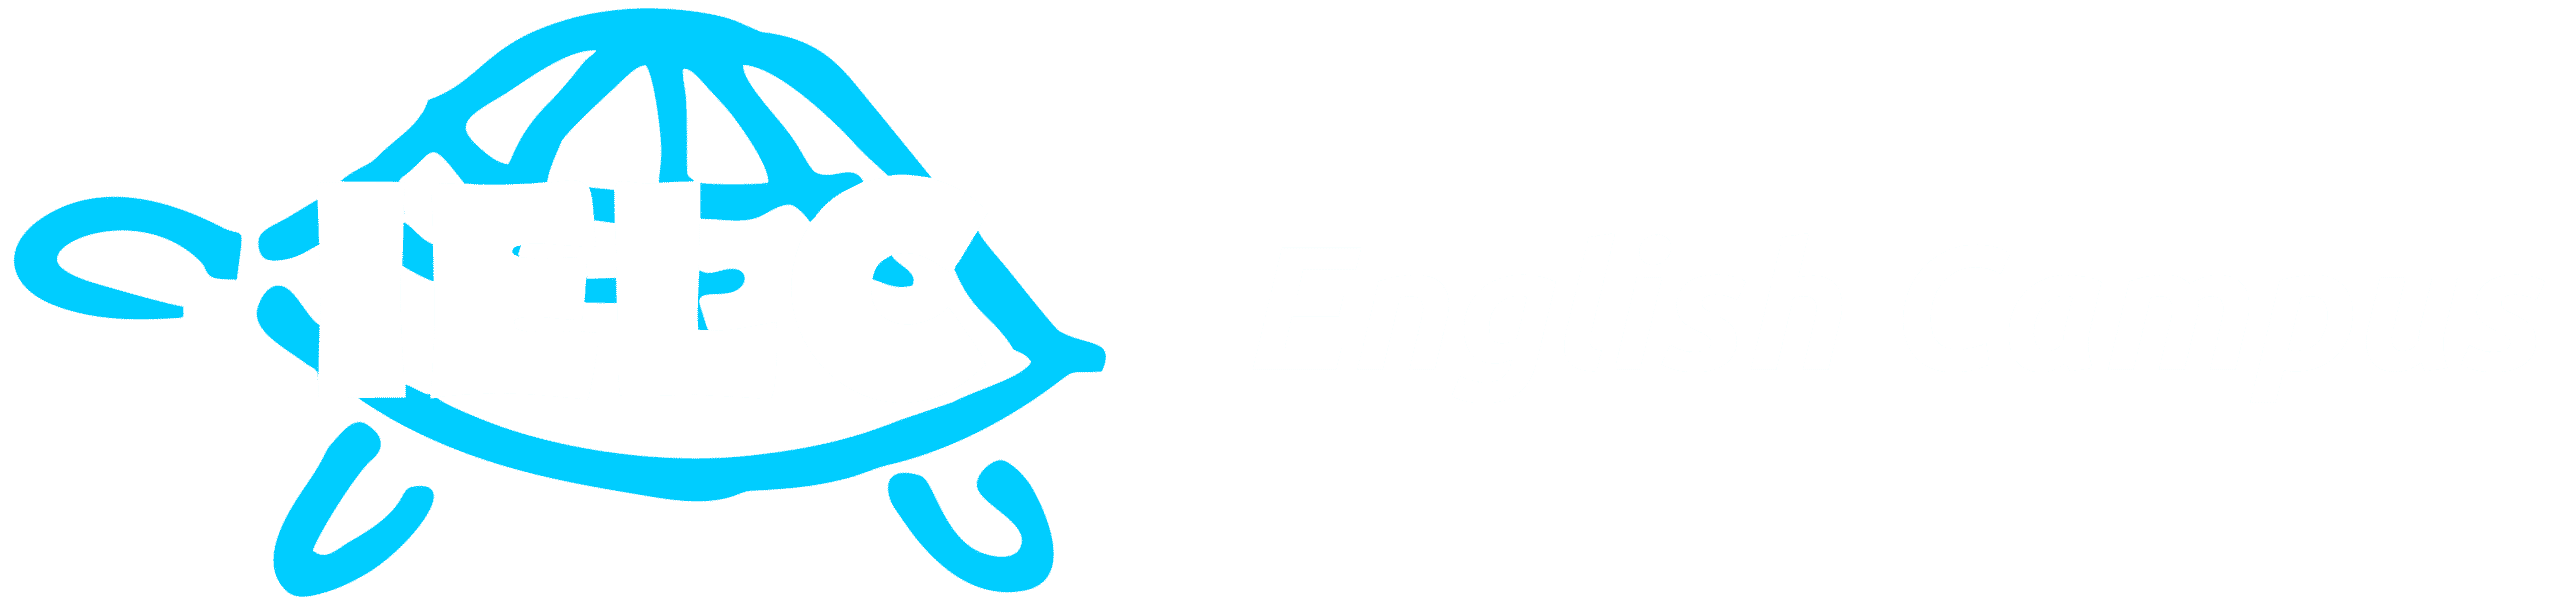 IELC English Campus Logo 2